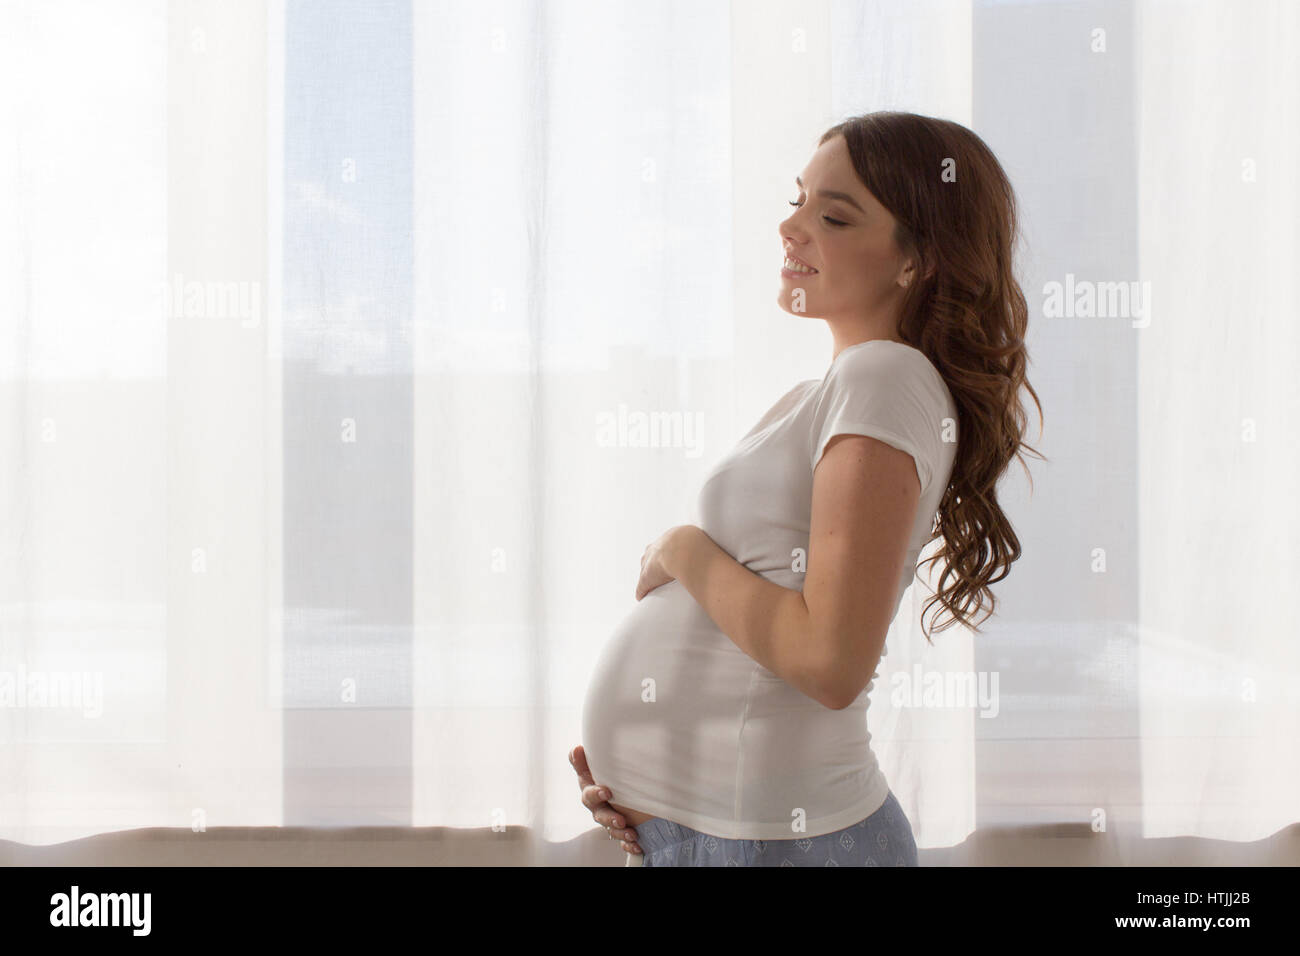 Junge schwangere Frau mit geschlossenen Augen ihren Magen zu umarmen. Horizontale drinnen geschossen Stockfoto